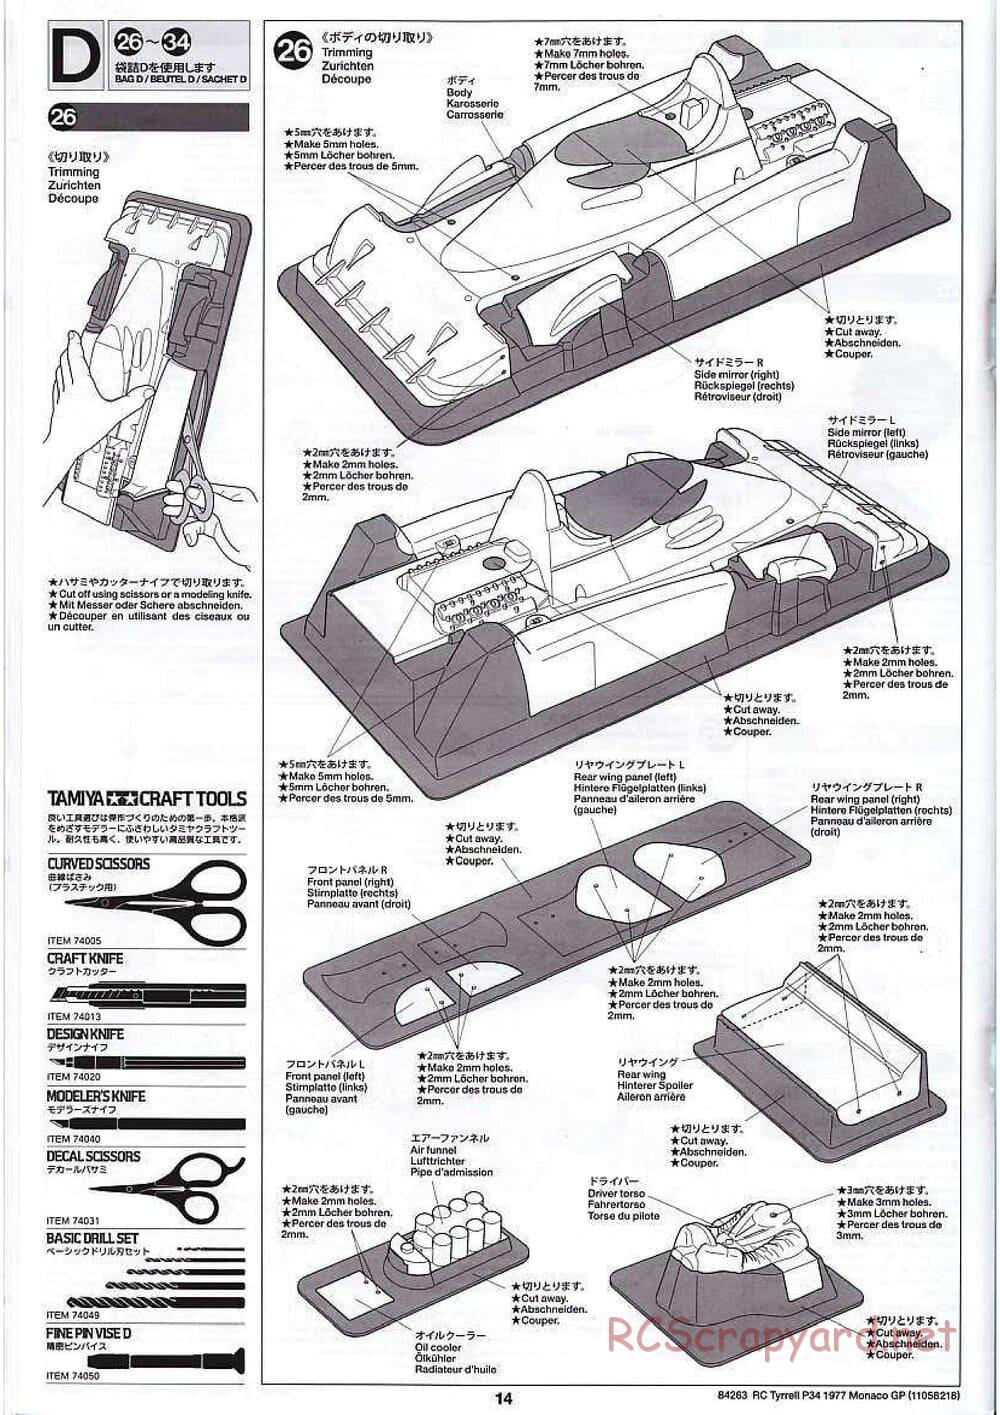 Tamiya - Tyrrell P34 1977 Monaco GP - F103-6W Chassis - Manual - Page 14